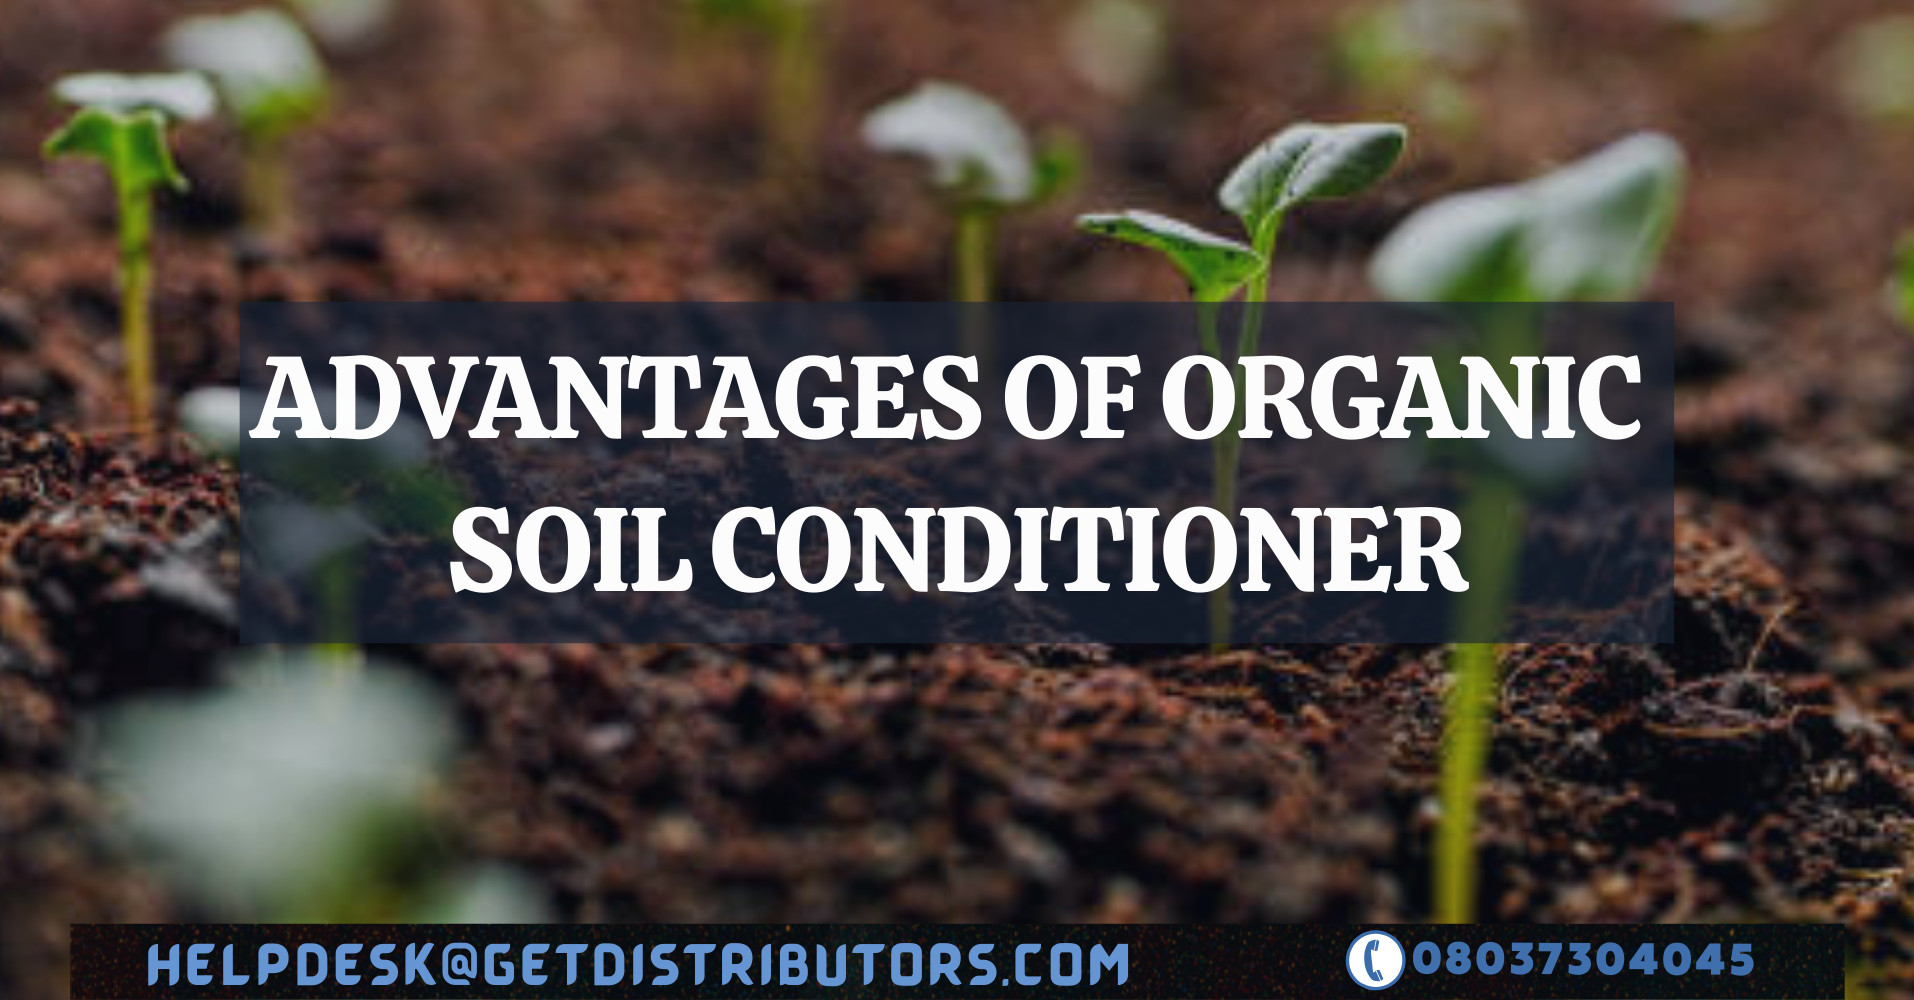 Advantages of organic soil conditioner